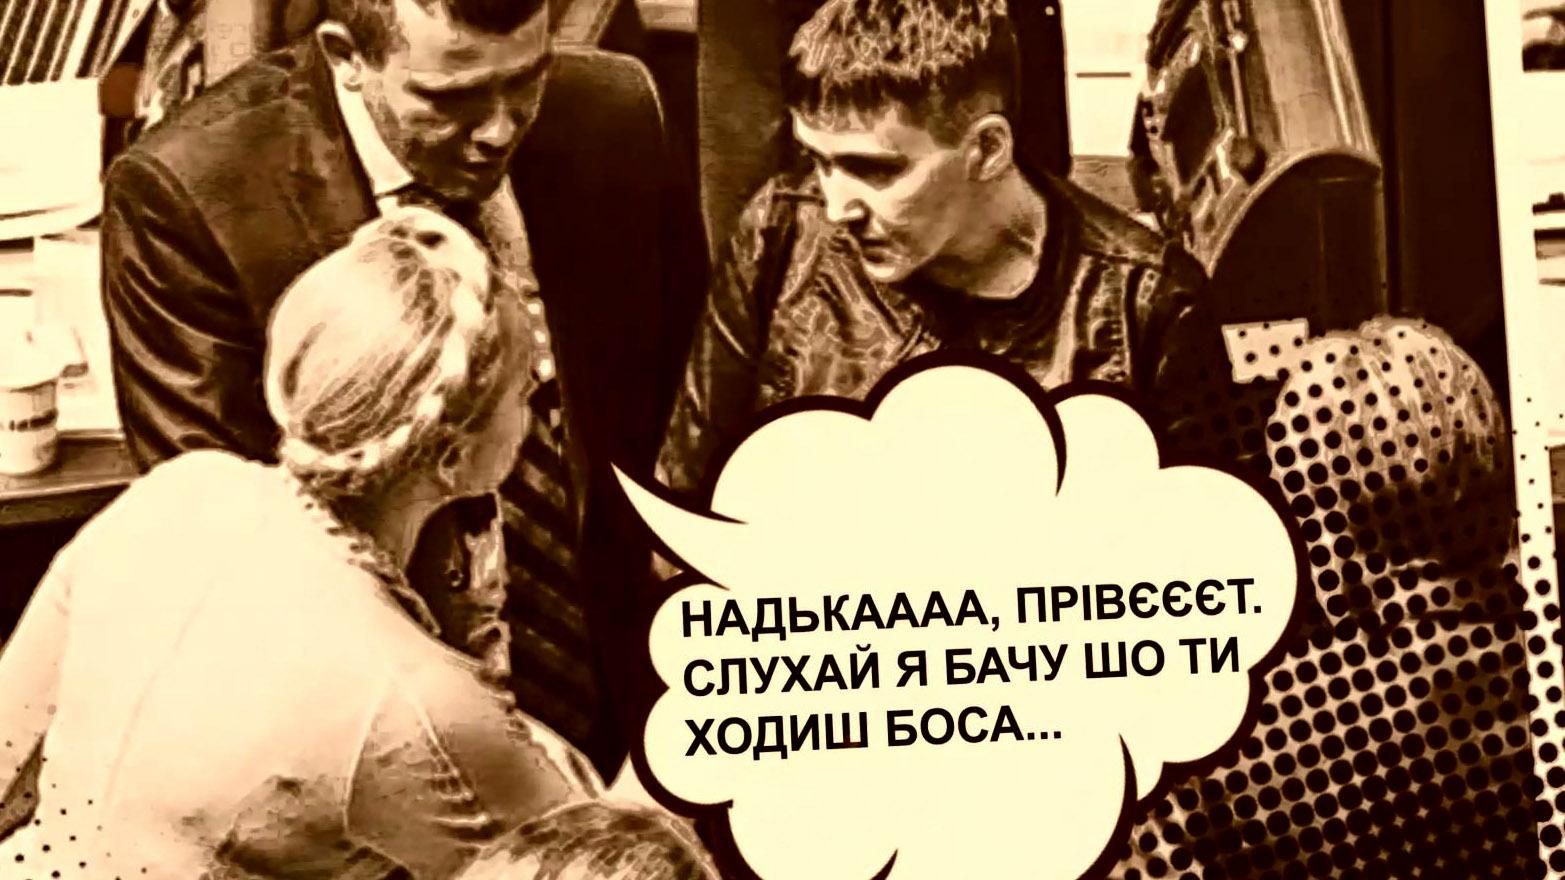 Що Тимошенко сказала Савченко: меми від "Вєстєй.UA"